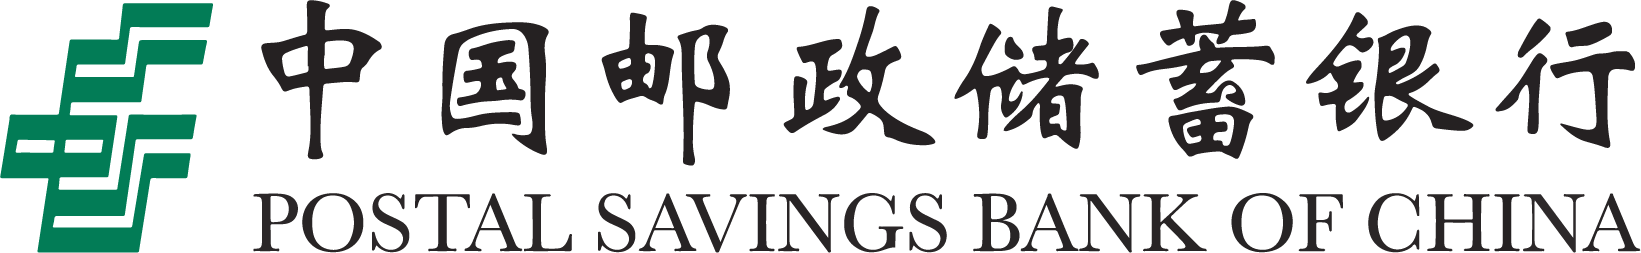 Postal Savings Bank of China Logo png